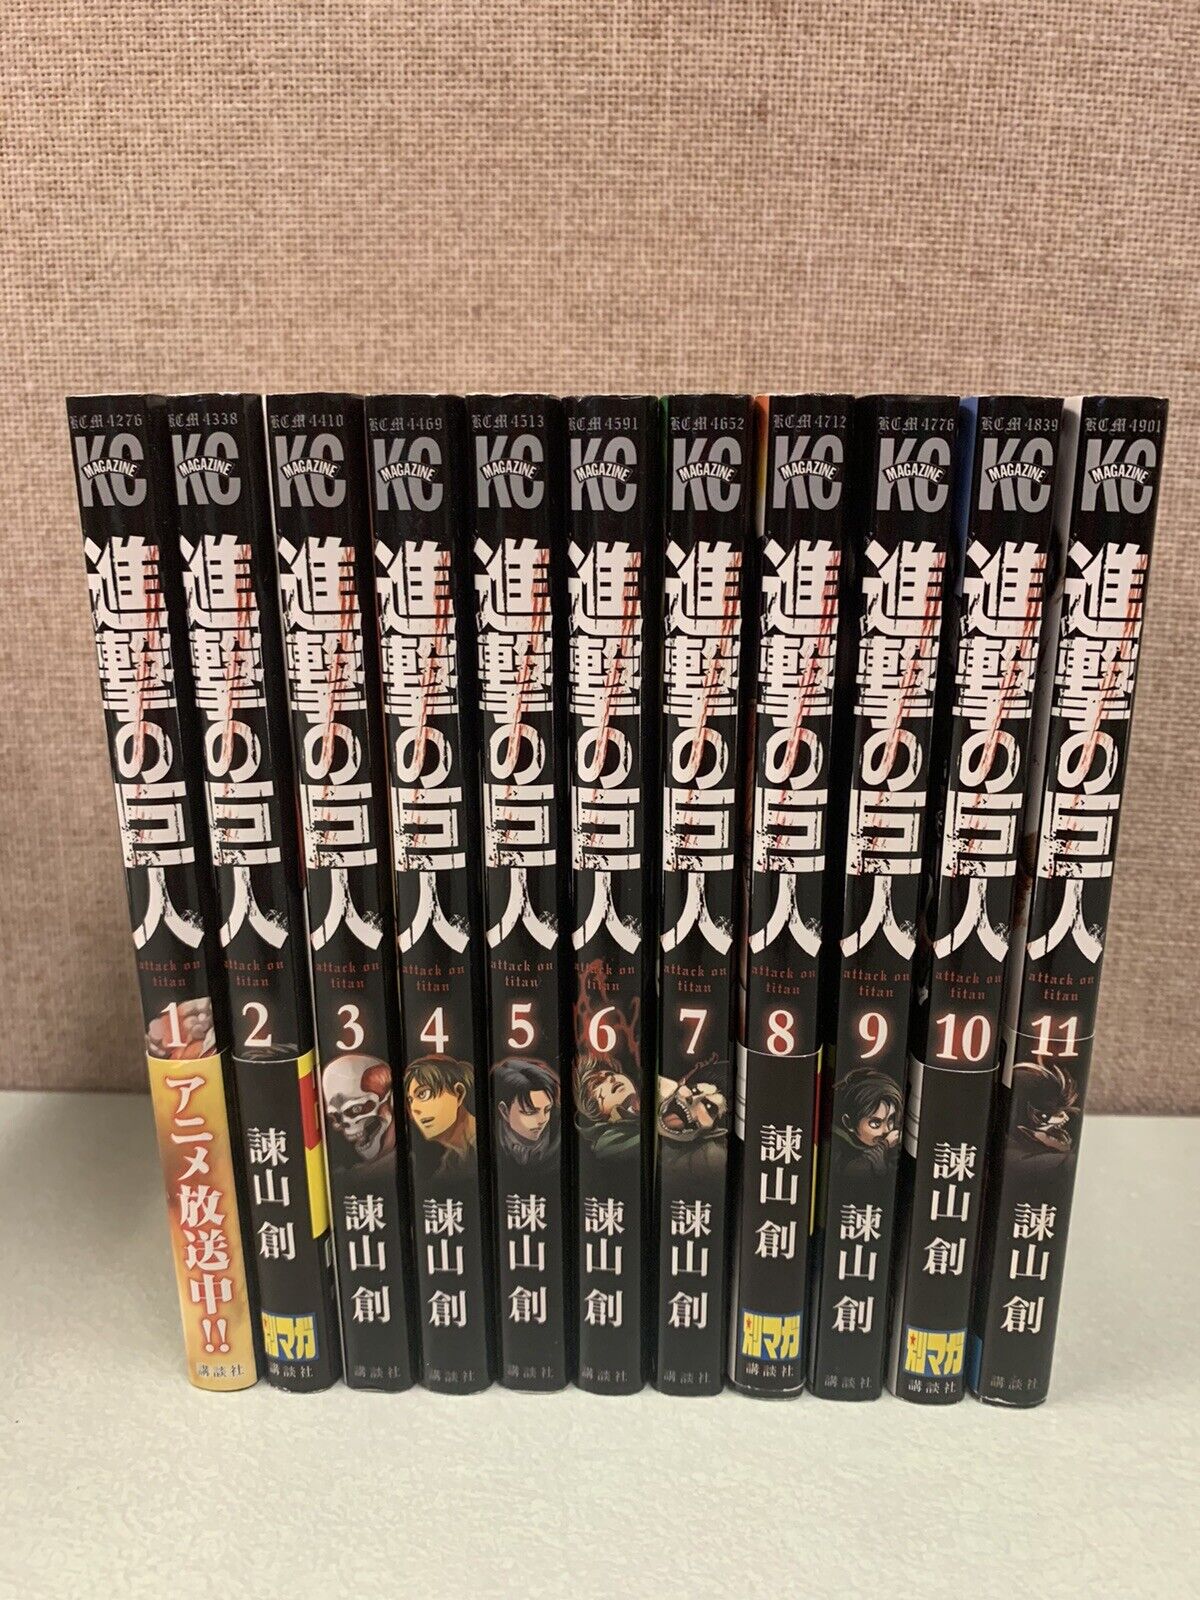 Attack On Titan 【Japanese language】Vol. 1 - 11 set Manga Comics VG